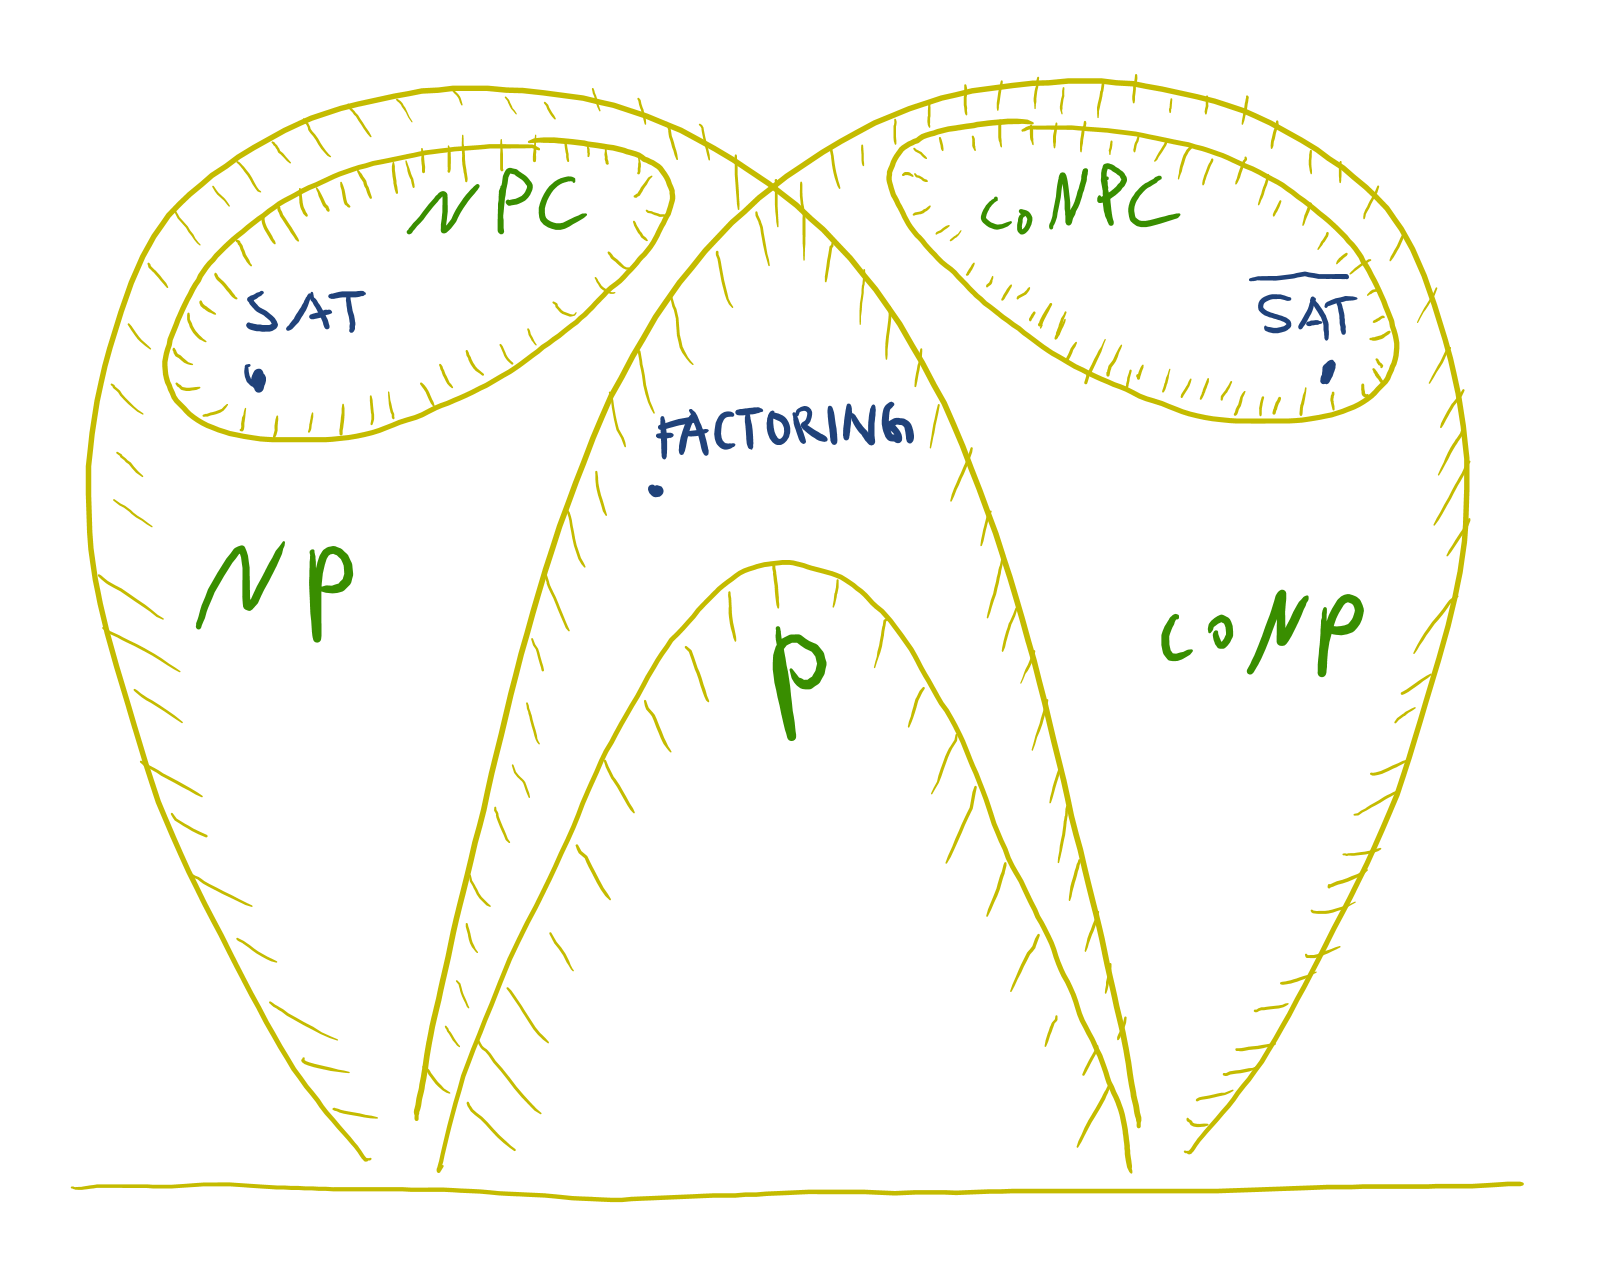 Conjectured NP vs coNP landscape